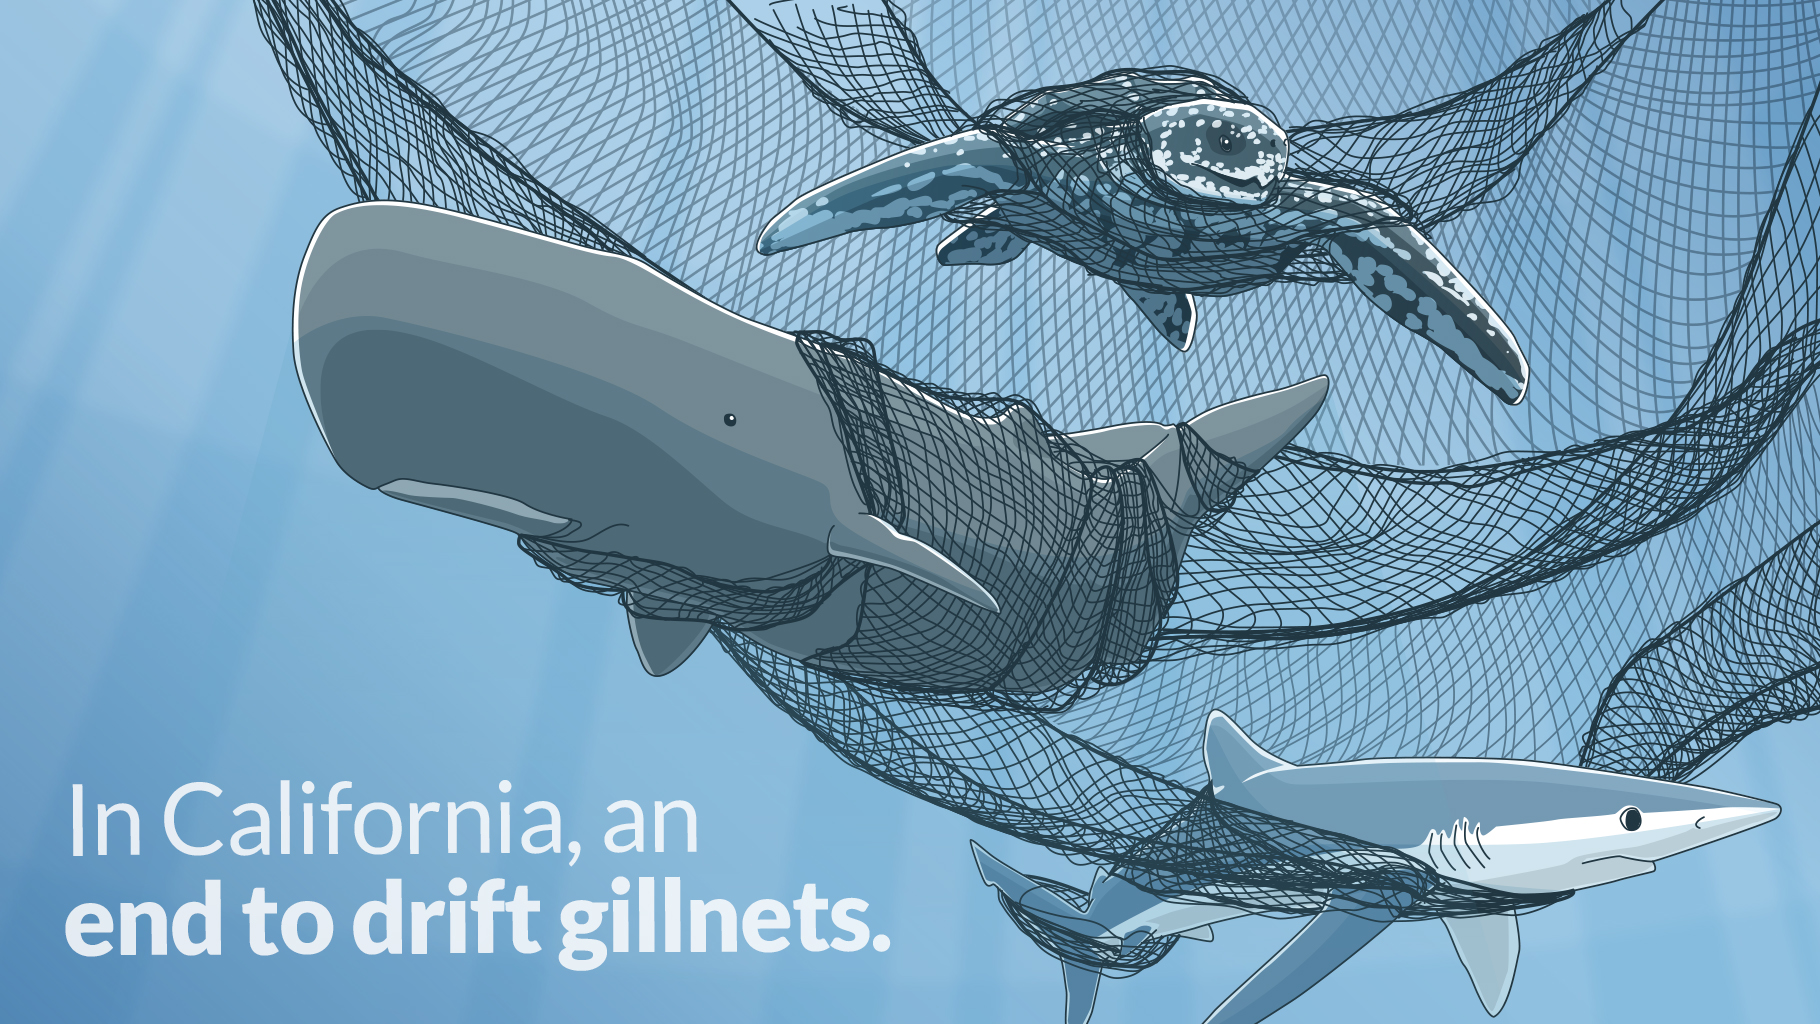 In Win for Marine Life, California to End Drift Gillnet Fishing